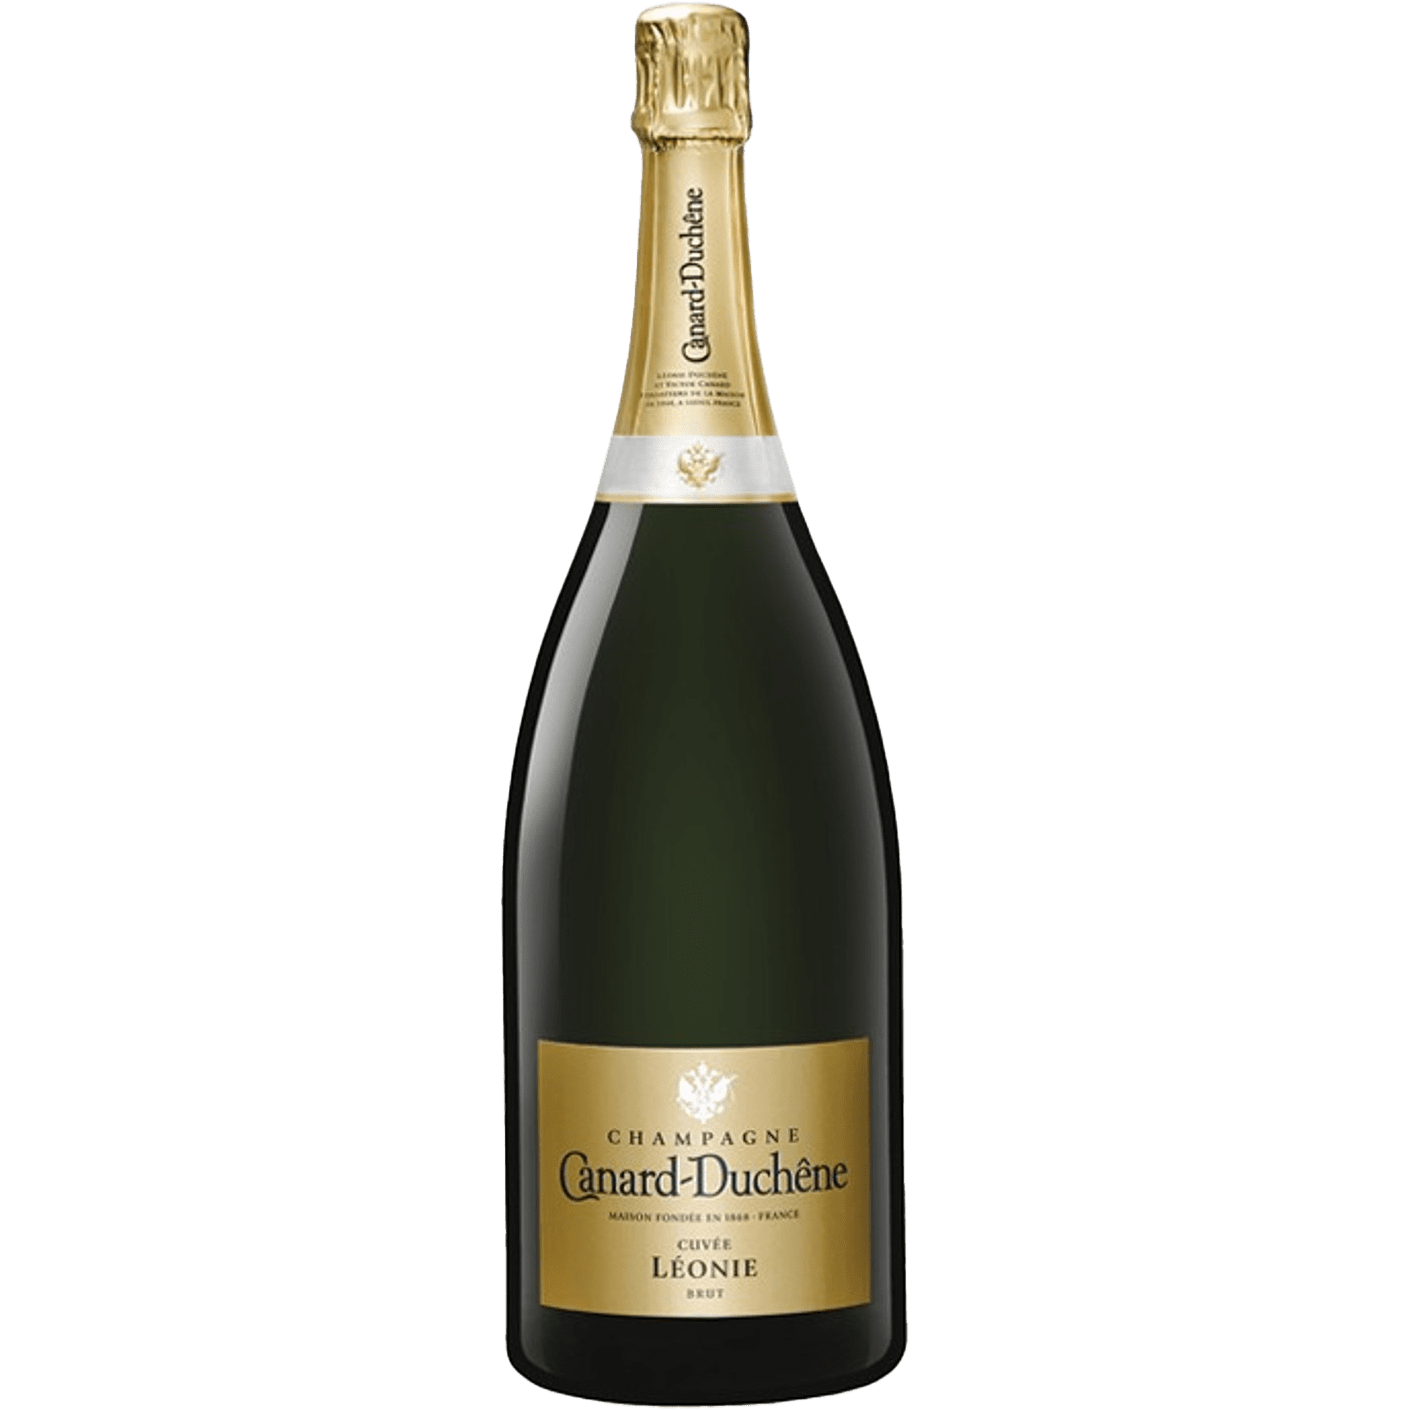 Champagne Canard-Duchêne Cuvée Léonie Brut